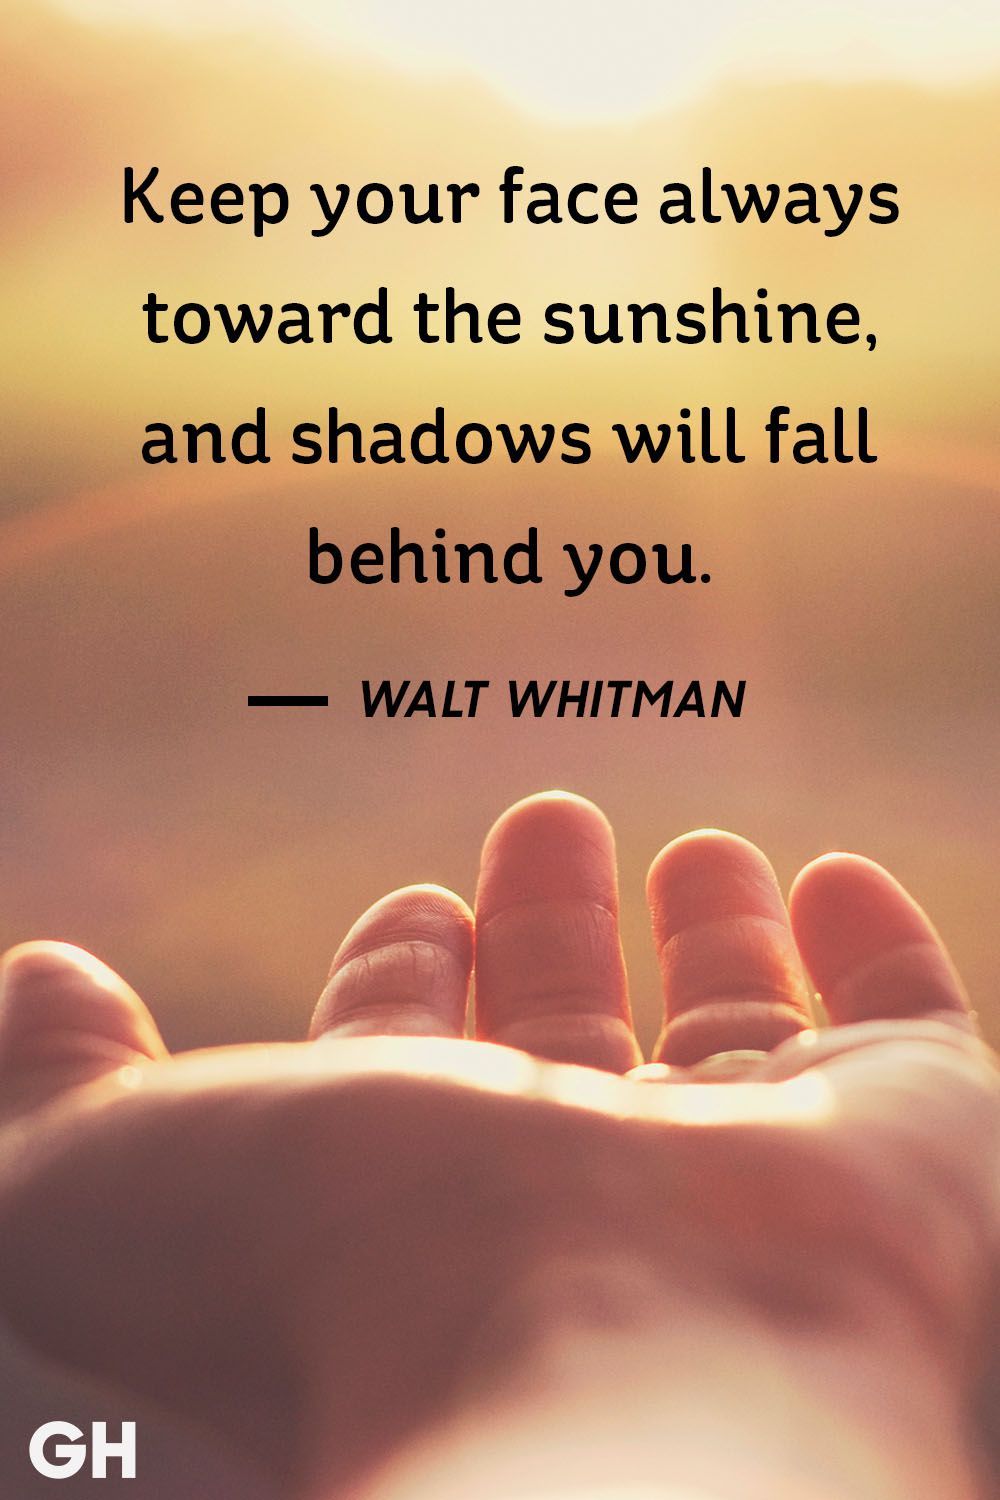 walt-whitman-inspirational-quote.jpg